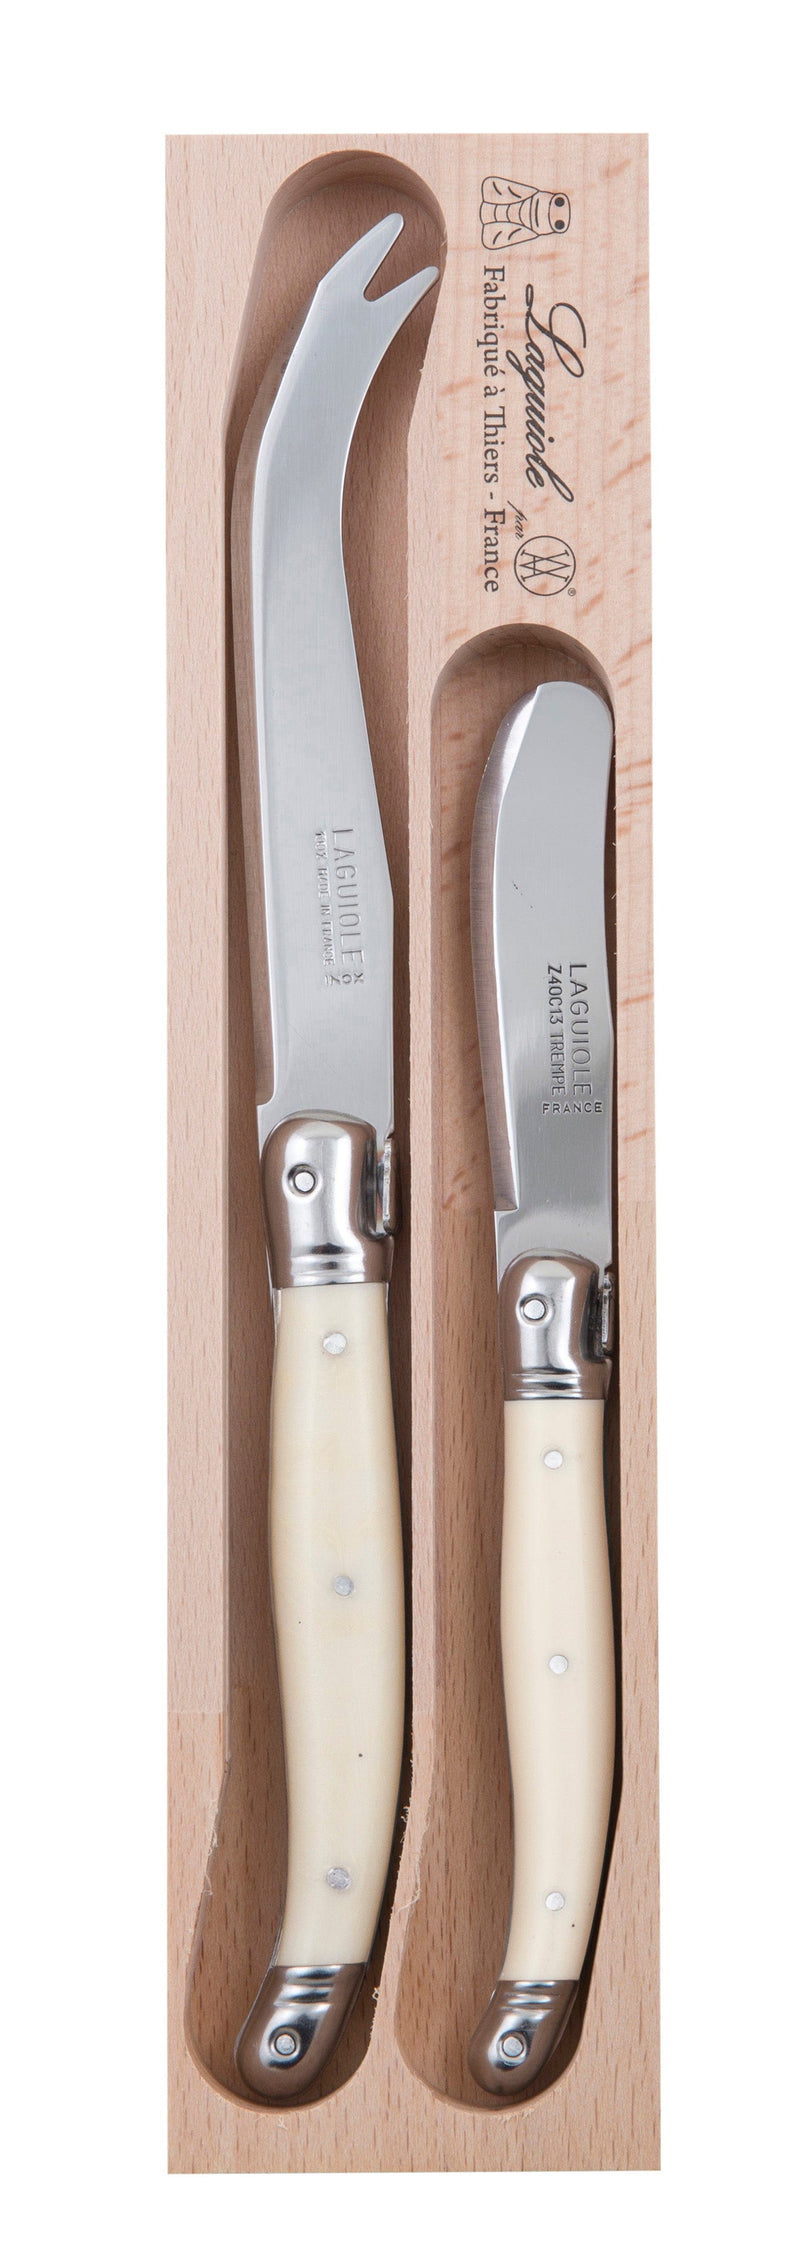 Andre Verdier Kitchenware Laguiole Stainless Steel Cheese & Pâté Knife Set